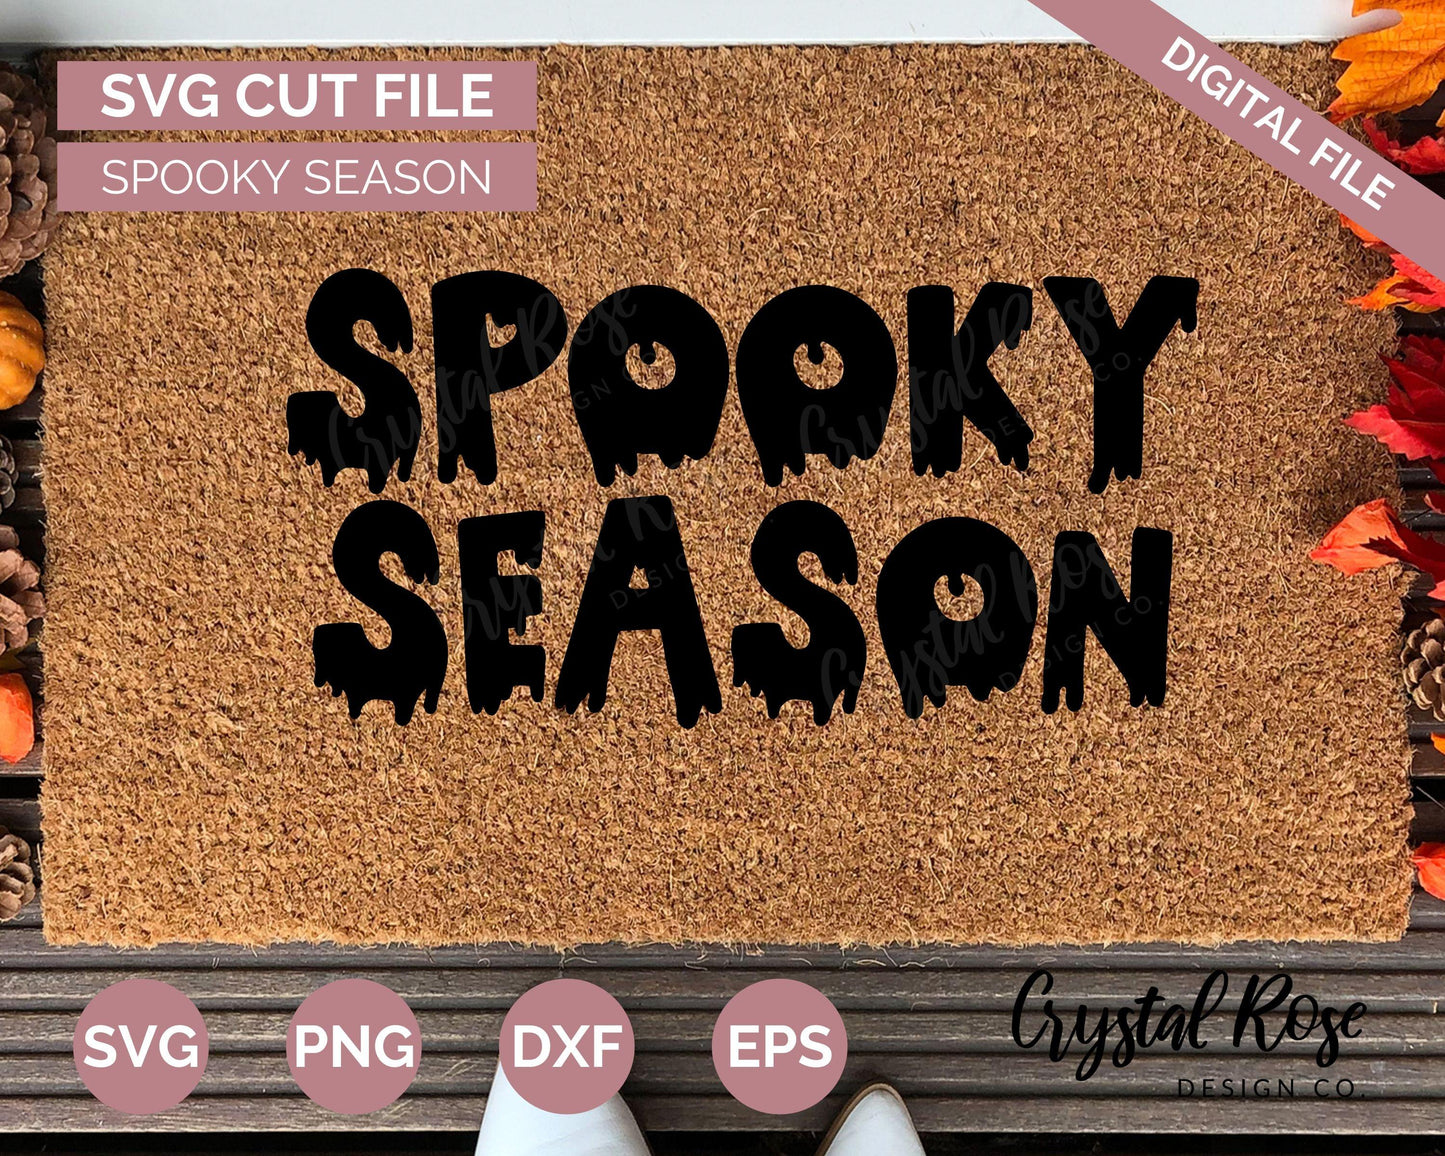 Spooky Season SVG, Halloween SVG, Digital Download, Cricut, Silhouette, Glowforge (includes svg/png/dxf/eps) - Crystal Rose Design Co.